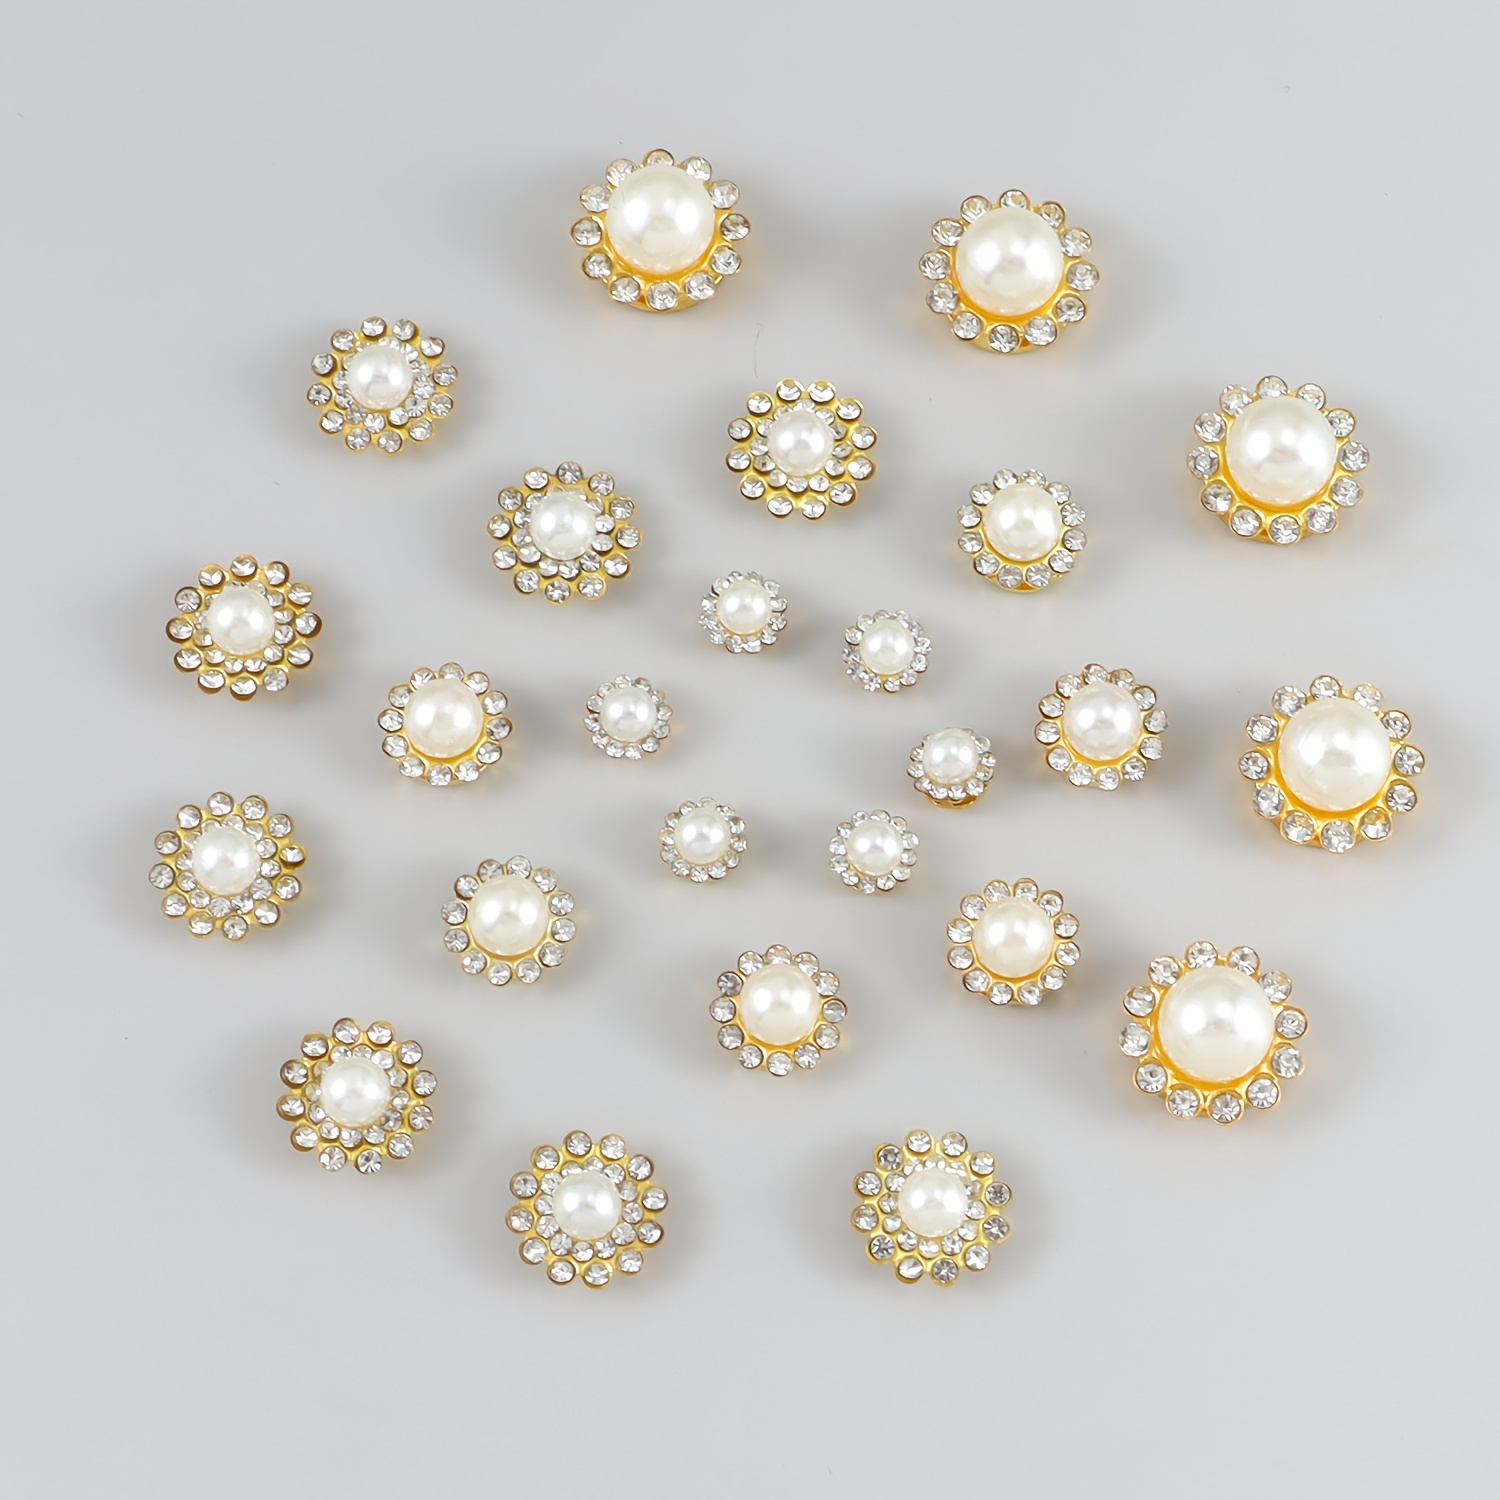 200 Pieces Pearl Flatback Rhinestones,12mm Flower Claw Cup Rhinestones for  Crafting Faux Shiny Diamond Rhinestone for Jewelry Making Hairwear